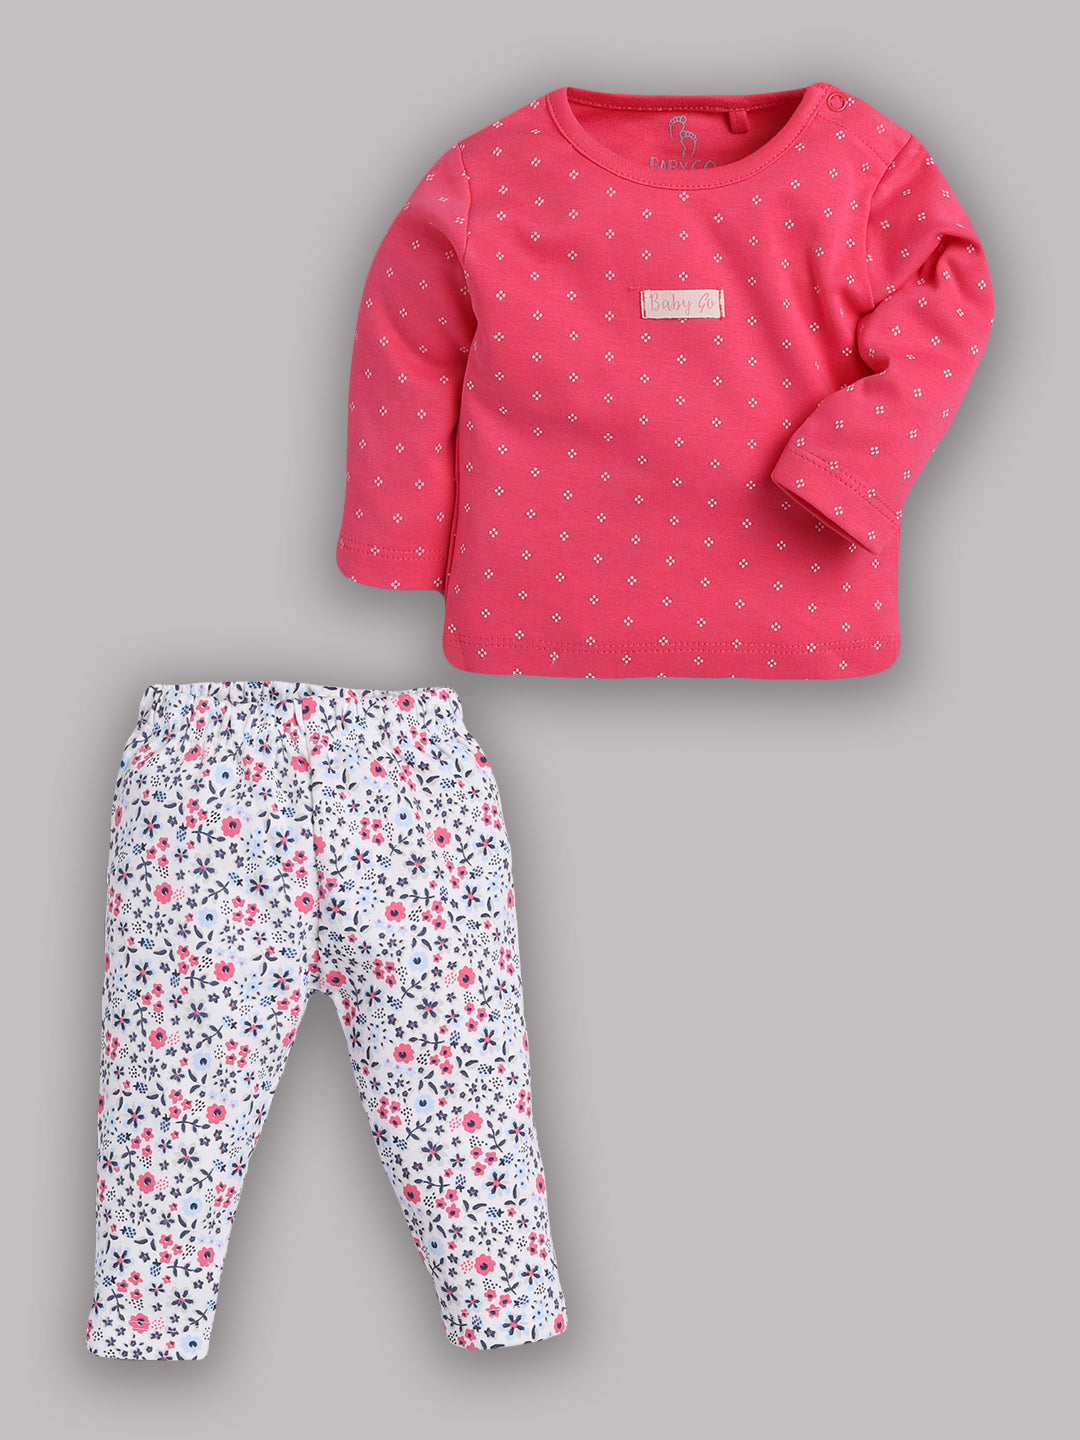 Baby full sleeve Cotton Dress/T-shirts pant set clothes for Baby Girl FUSHIA